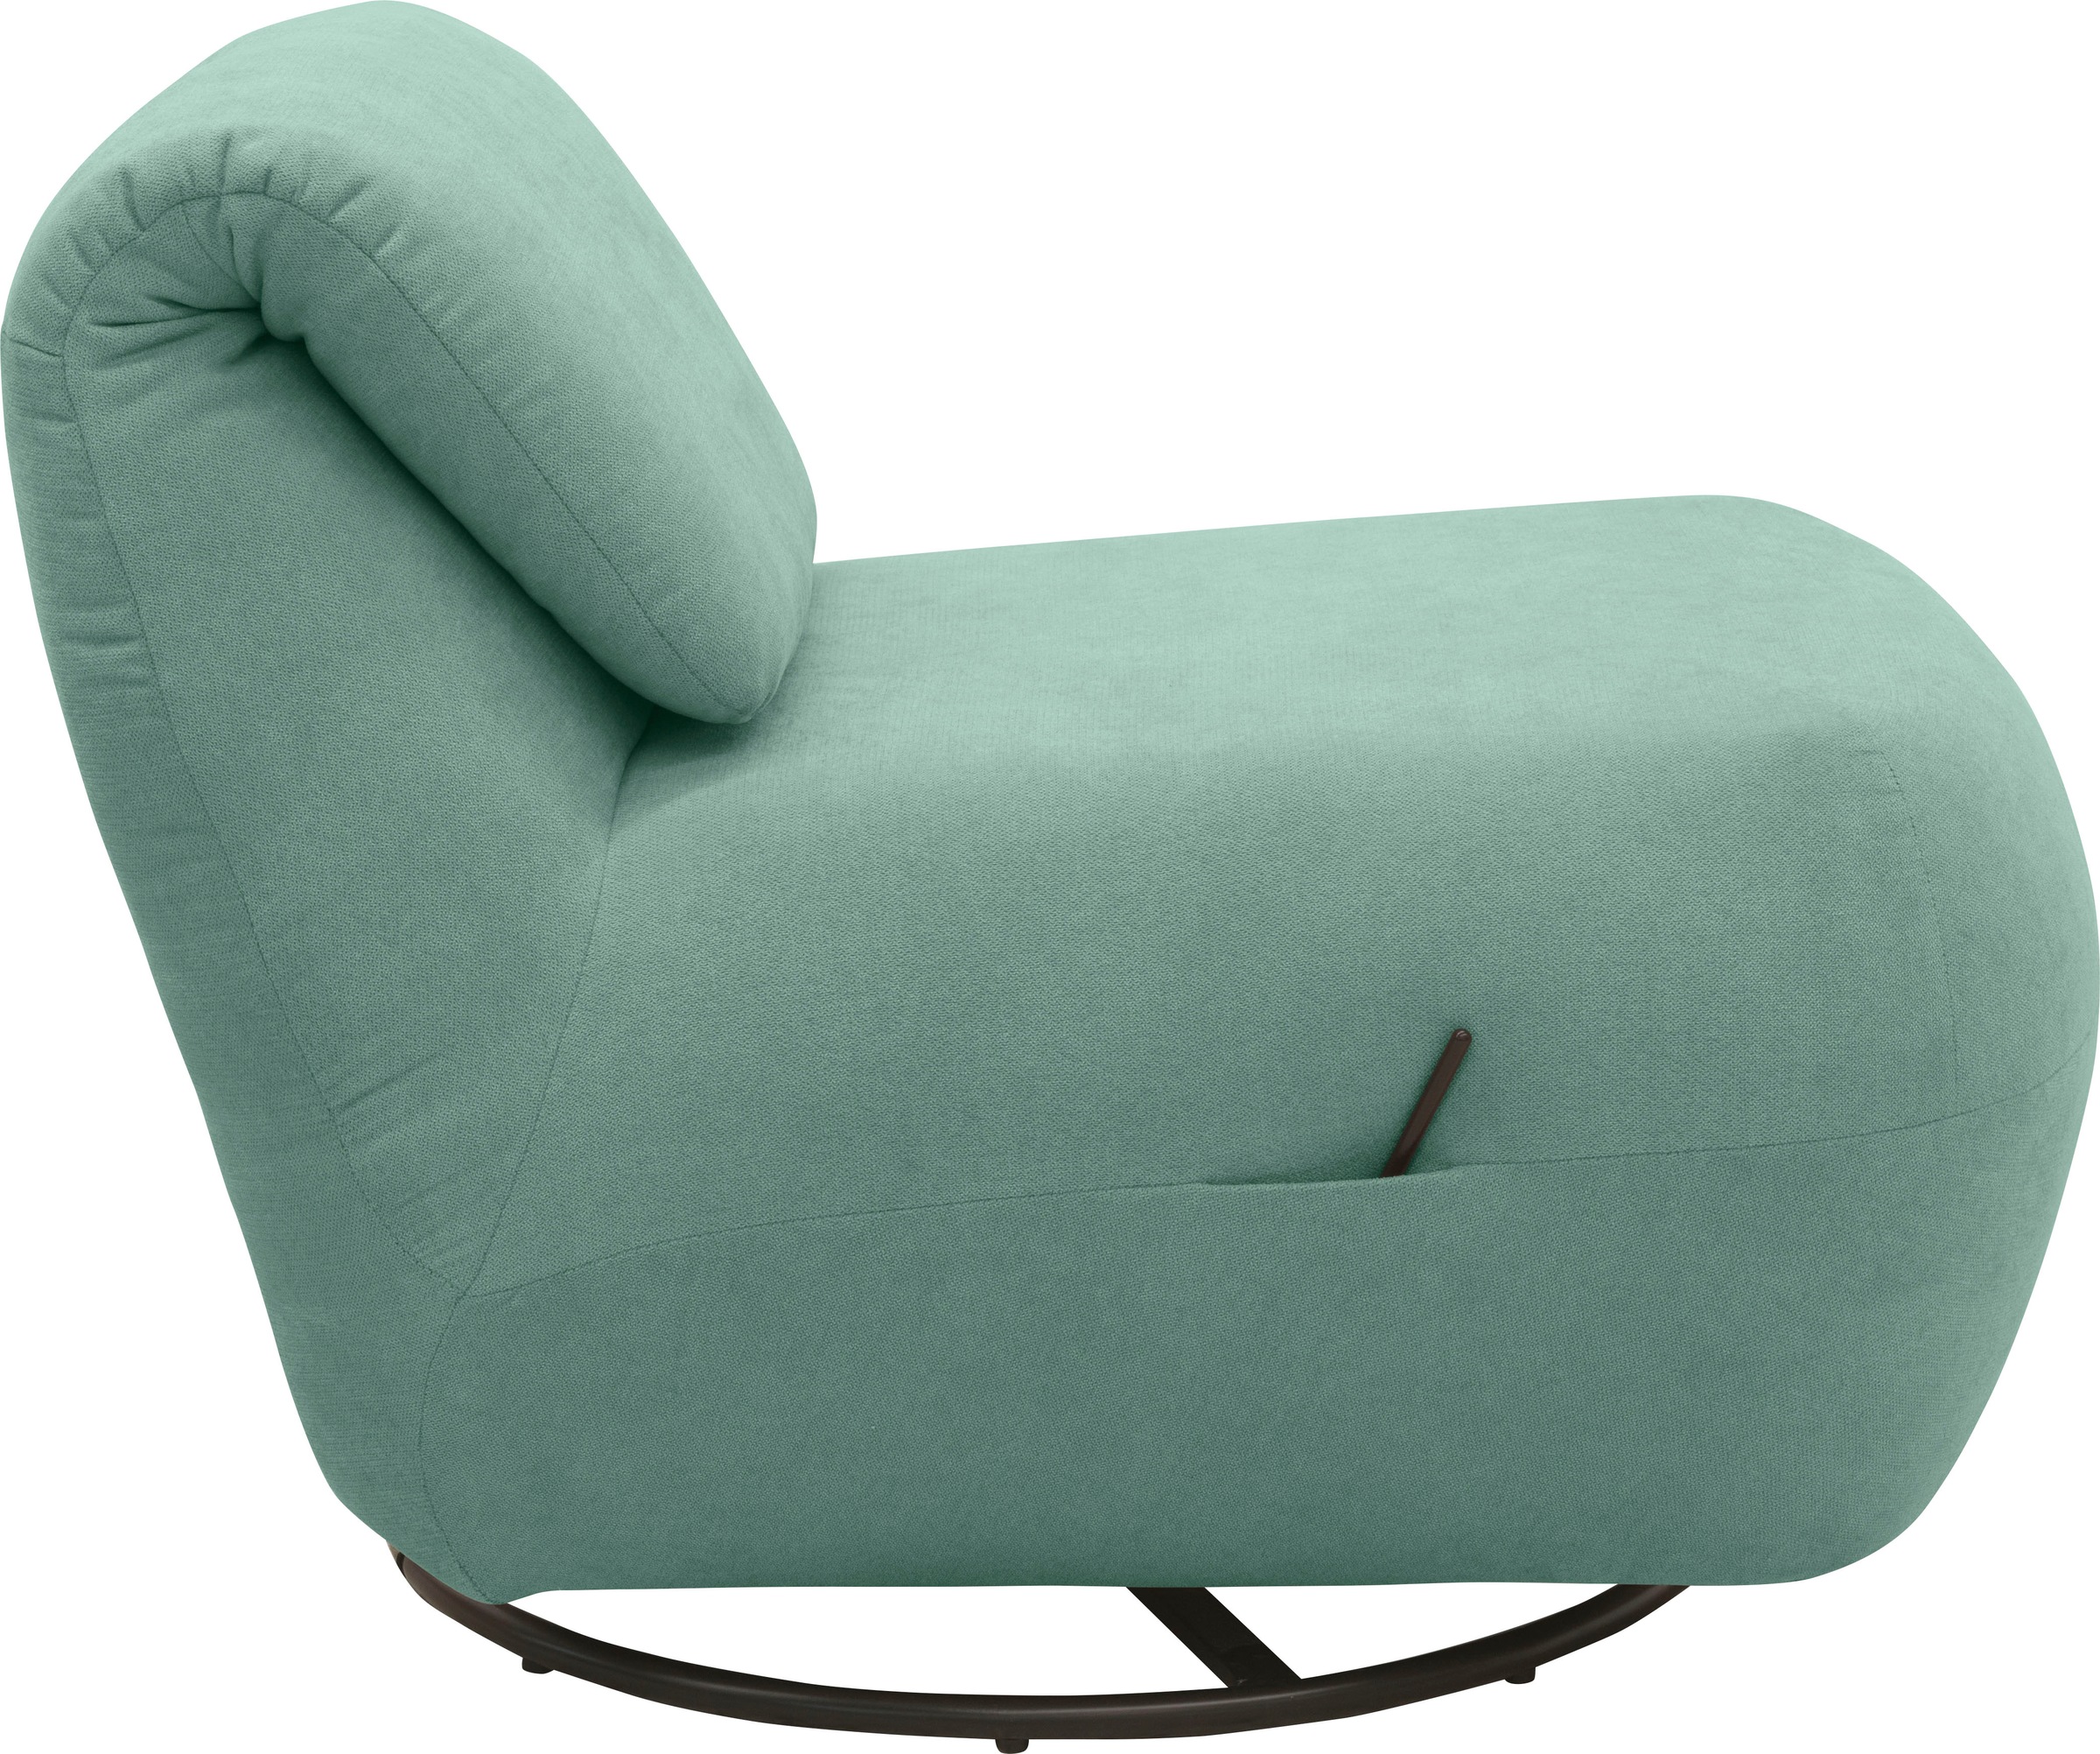 andas Relaxsessel »Emberson Sessel, Rückenlehne hochklappbar:«, Rückenverstellung, Drehfunktion, wahlweise auch Swivel (Wipp) Funktion